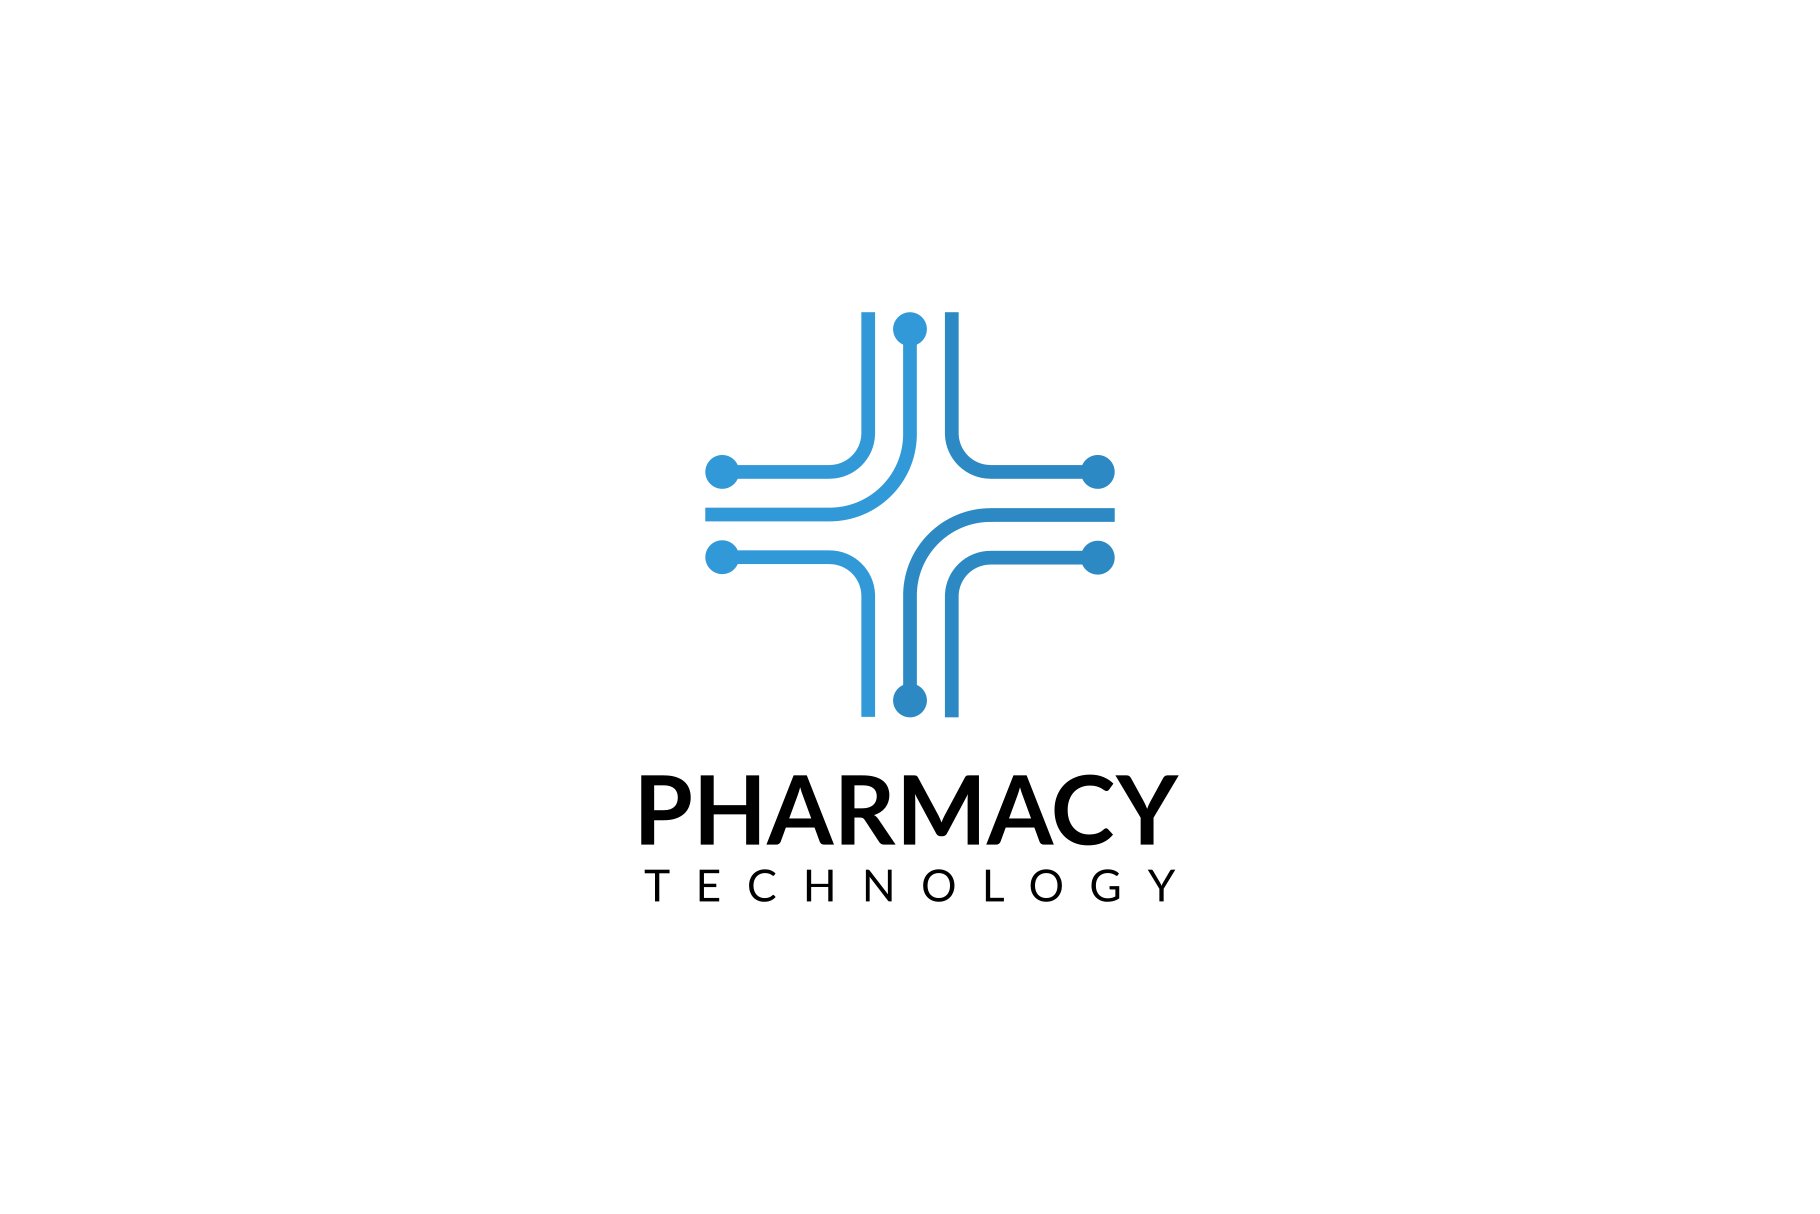 Medical technology service logo cover image.